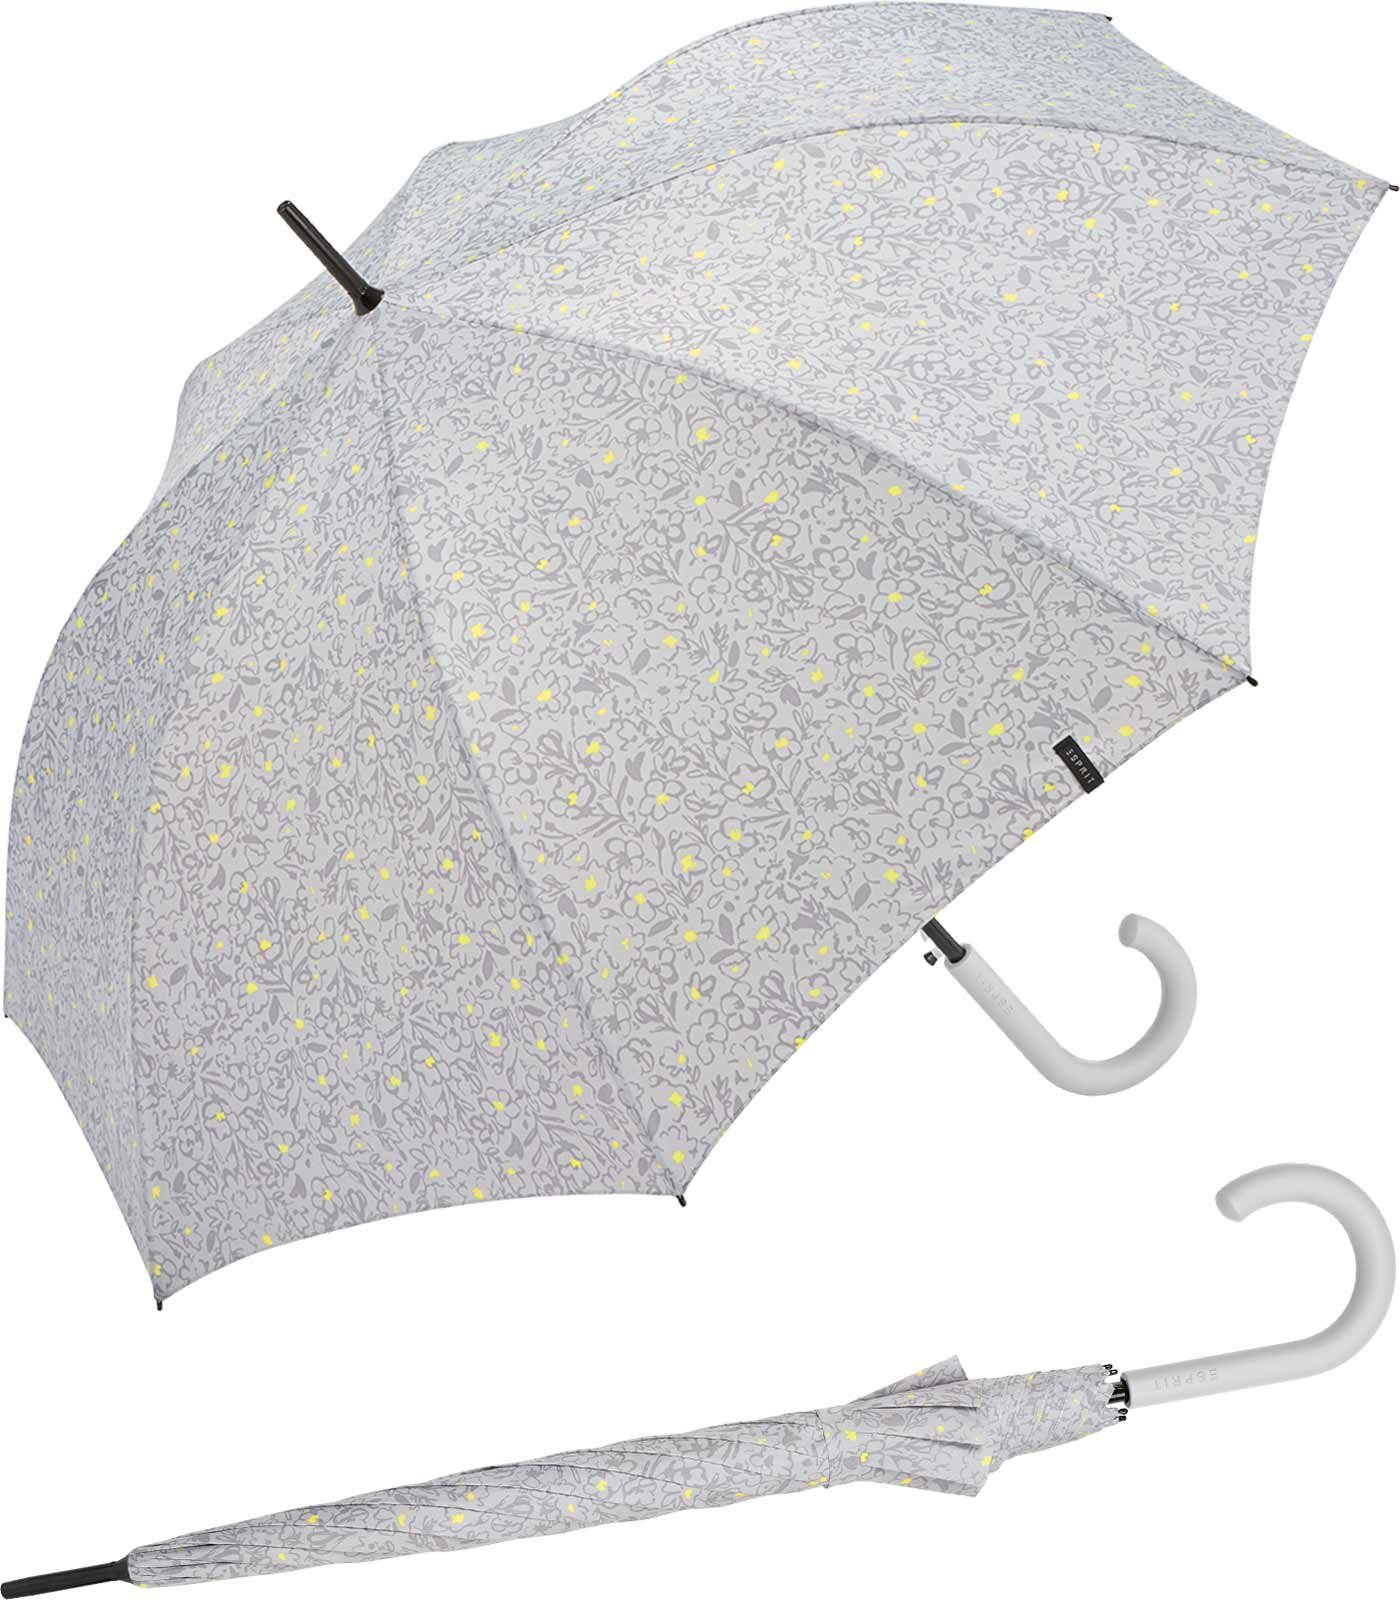 Esprit Langregenschirm Automatik Damen Scribbled mit mit grau Blüten-Muster romantischem Regenschirm Romance